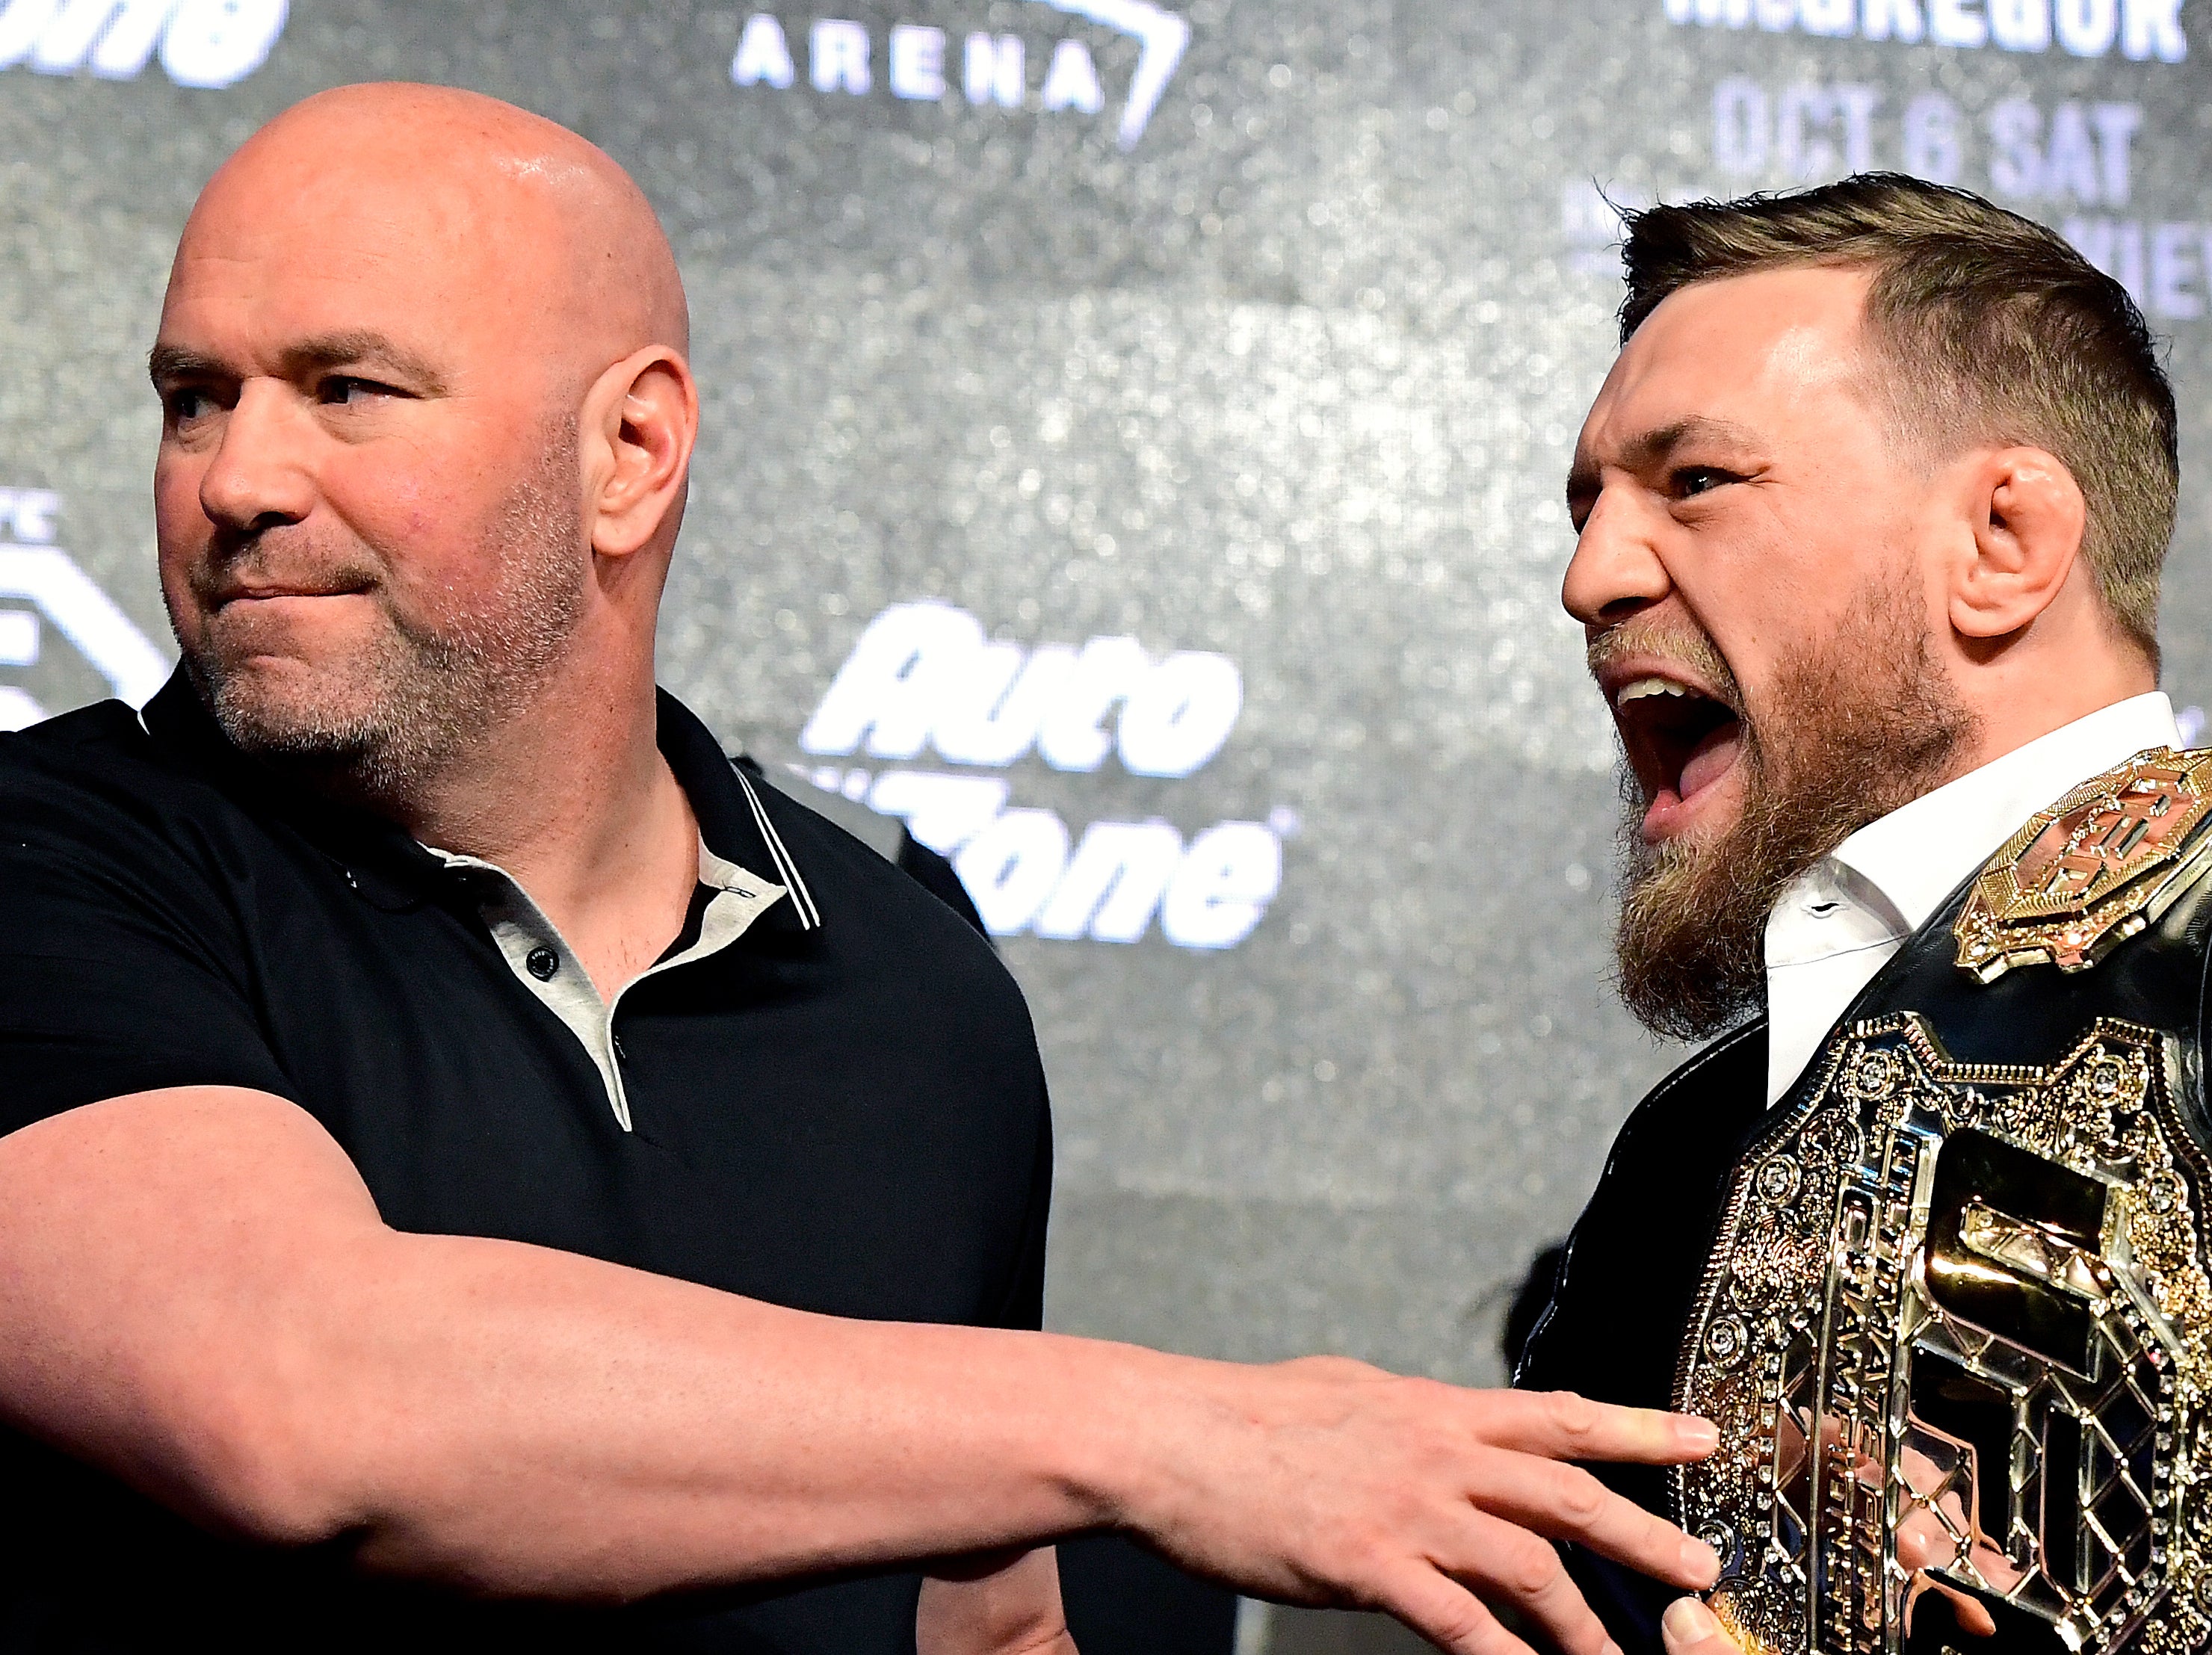 Dana White gives an update on McGregor’s UFC return